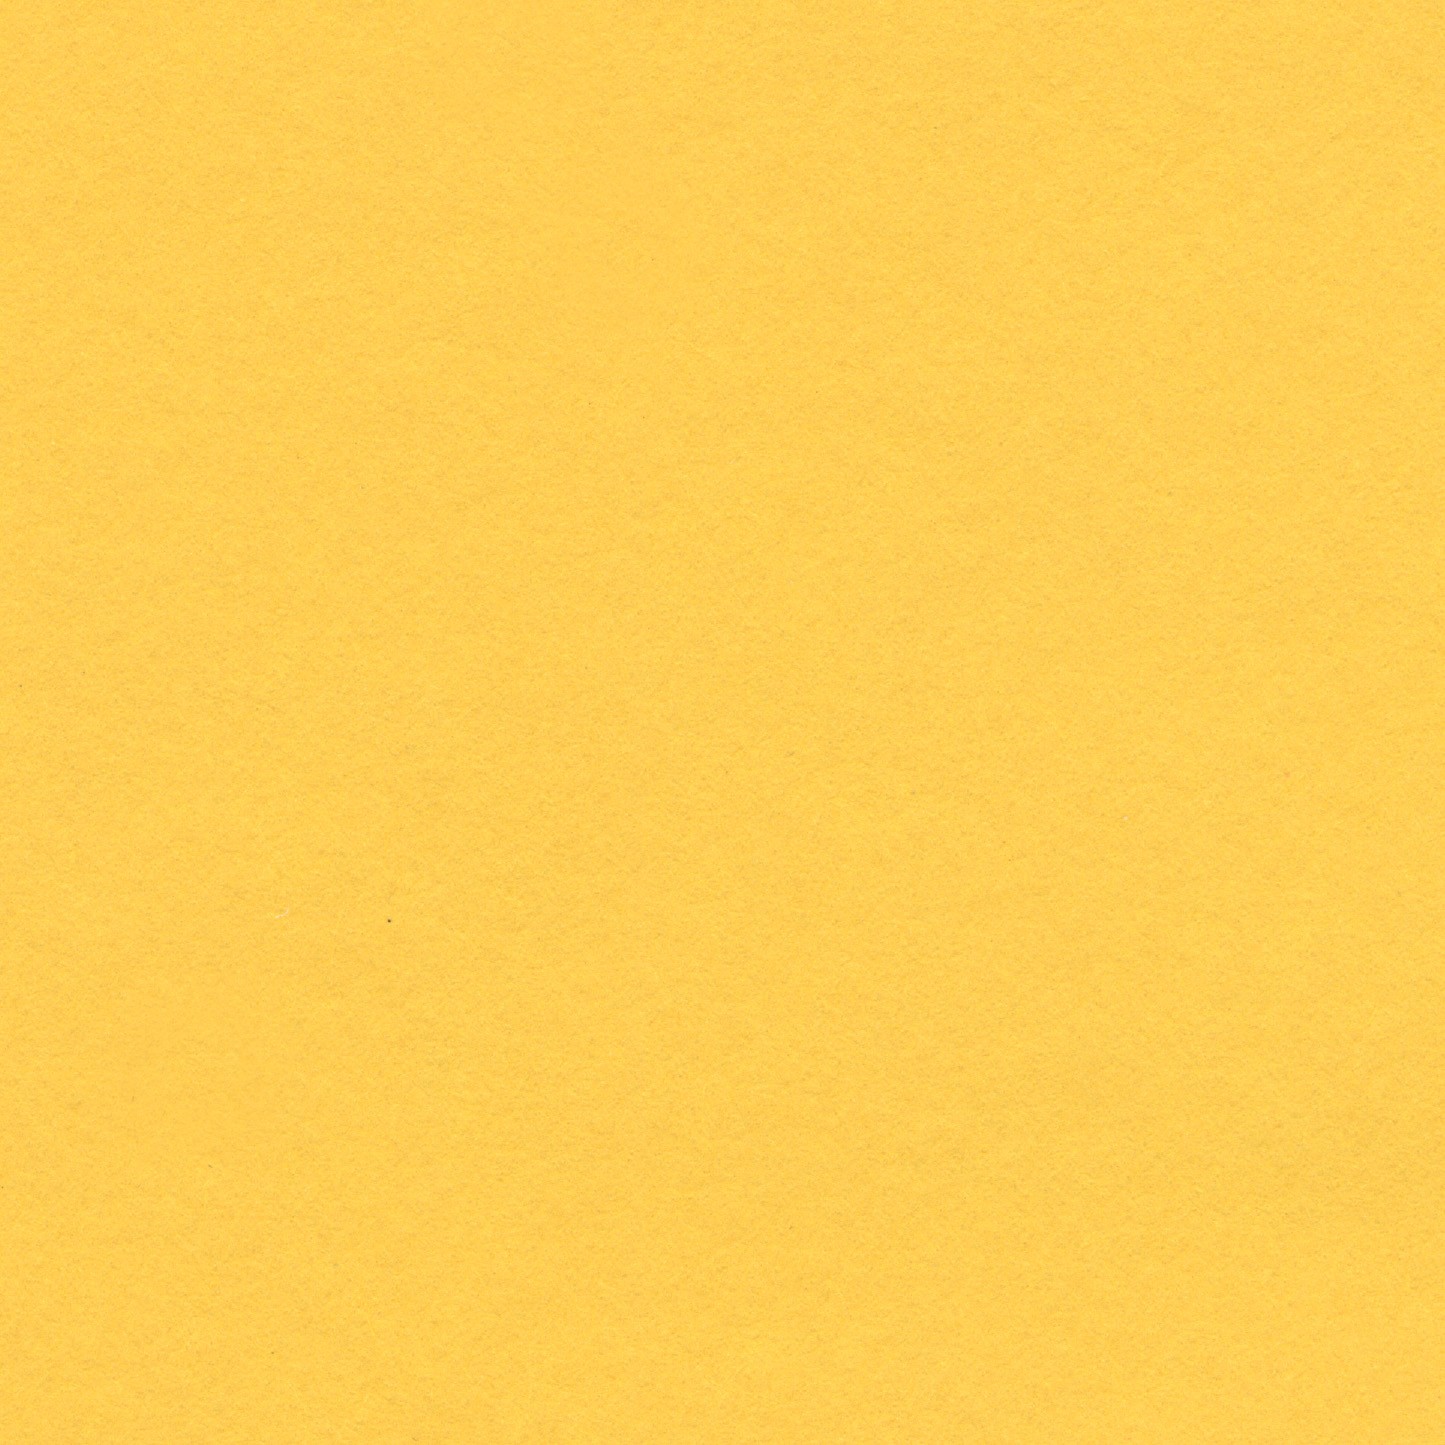 Yellow - Golden 150gsm